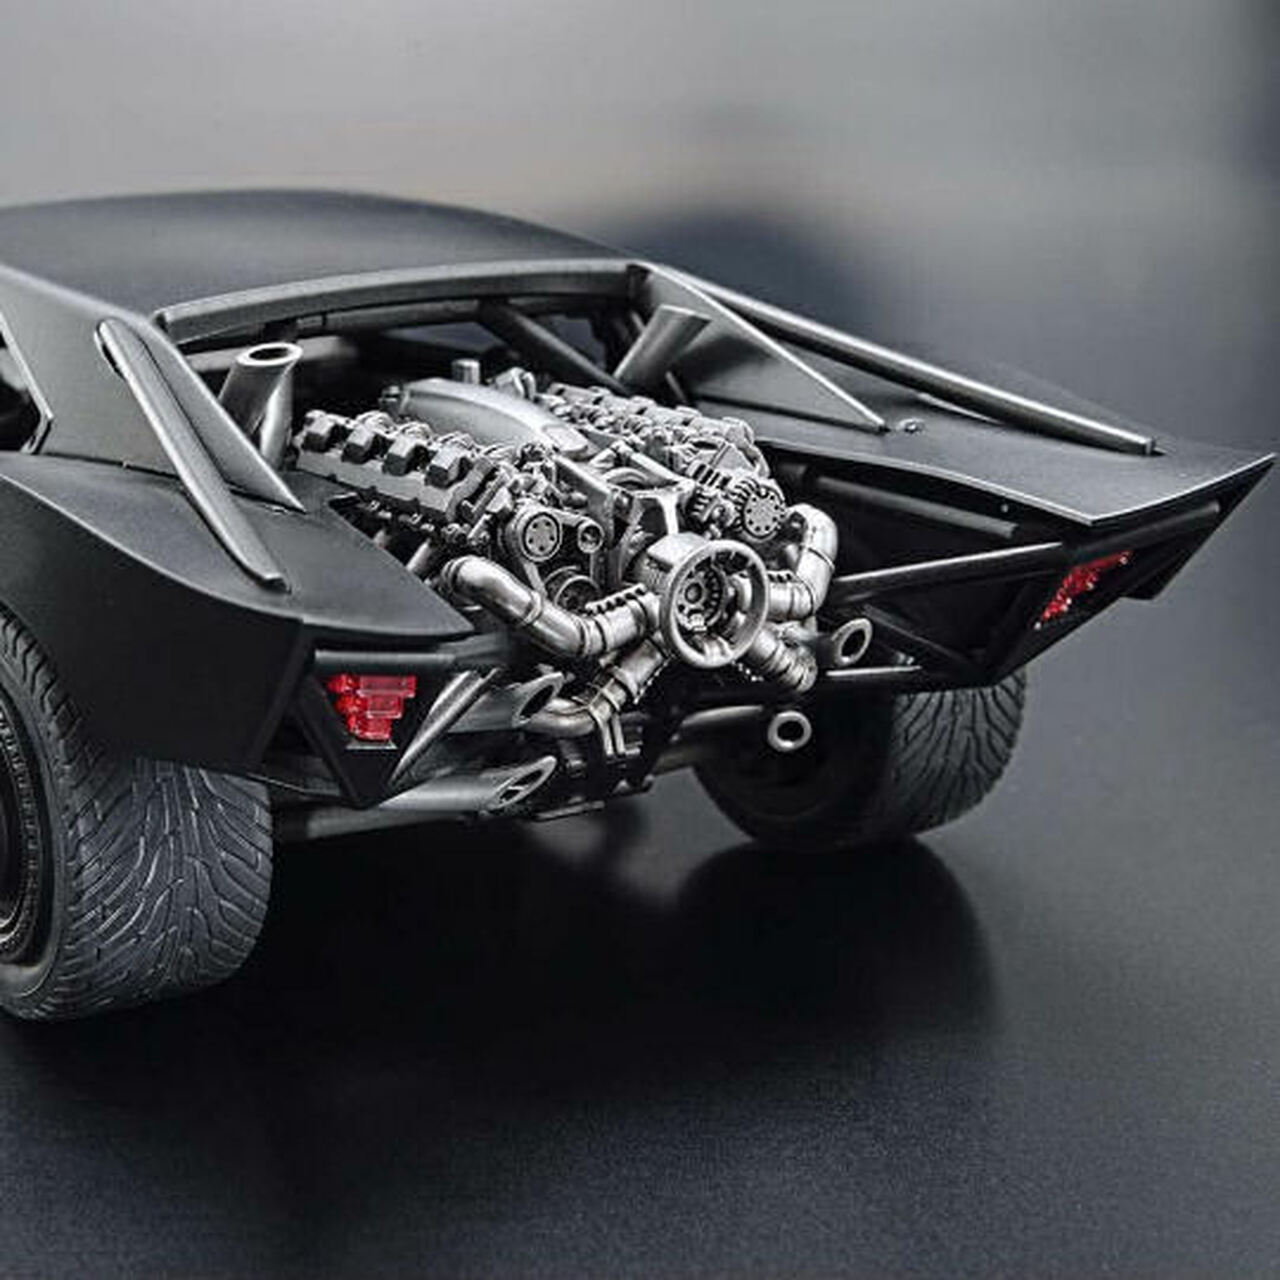 1/35 Scale Batmobile The Batman 2022 Ver.